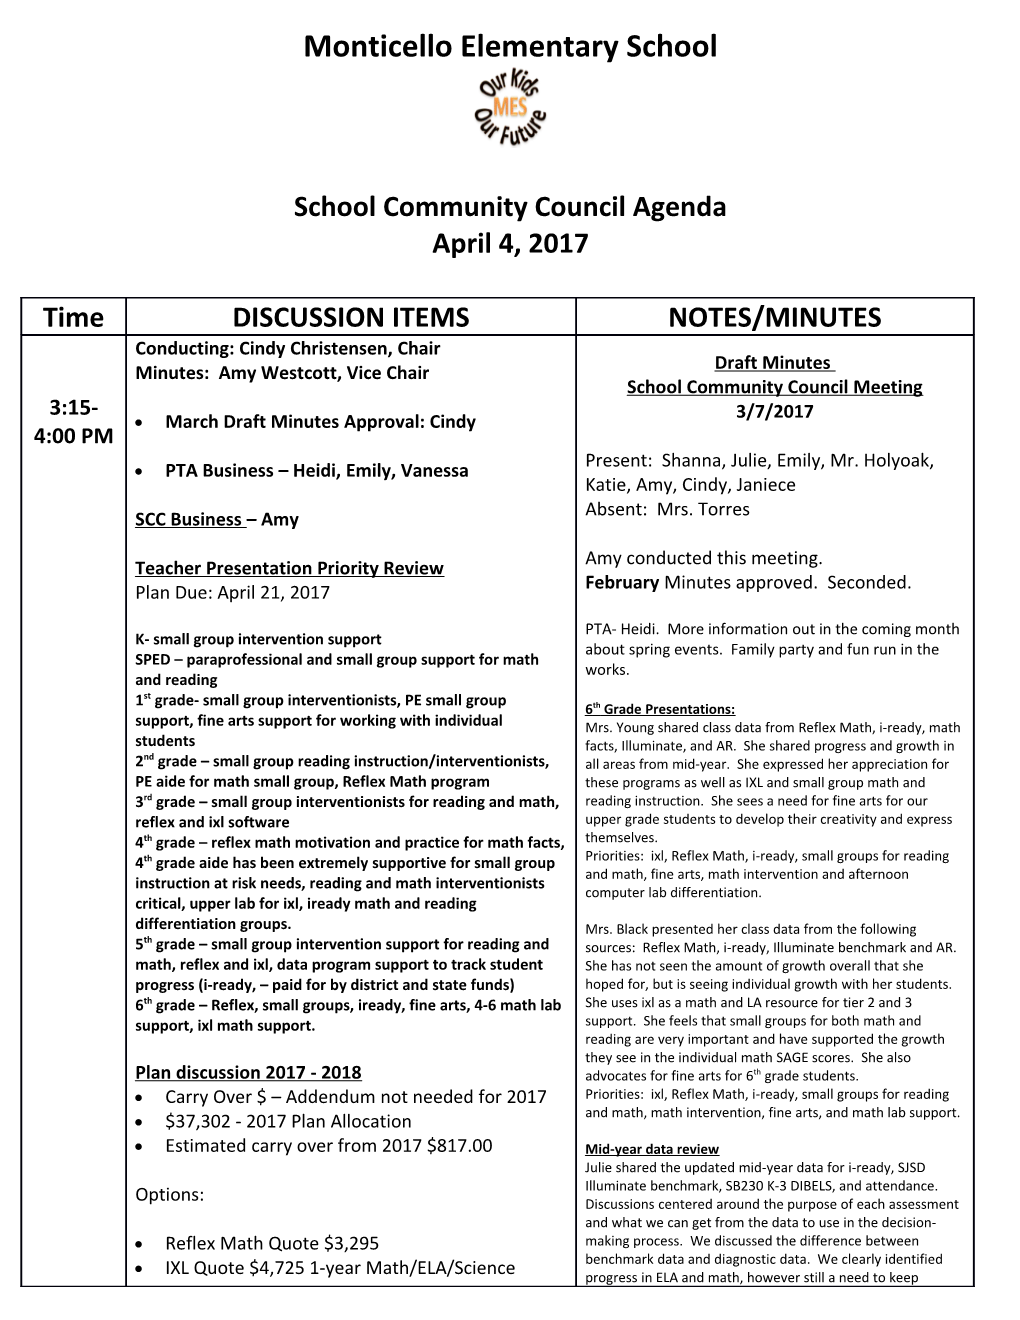 School Community Council Agenda